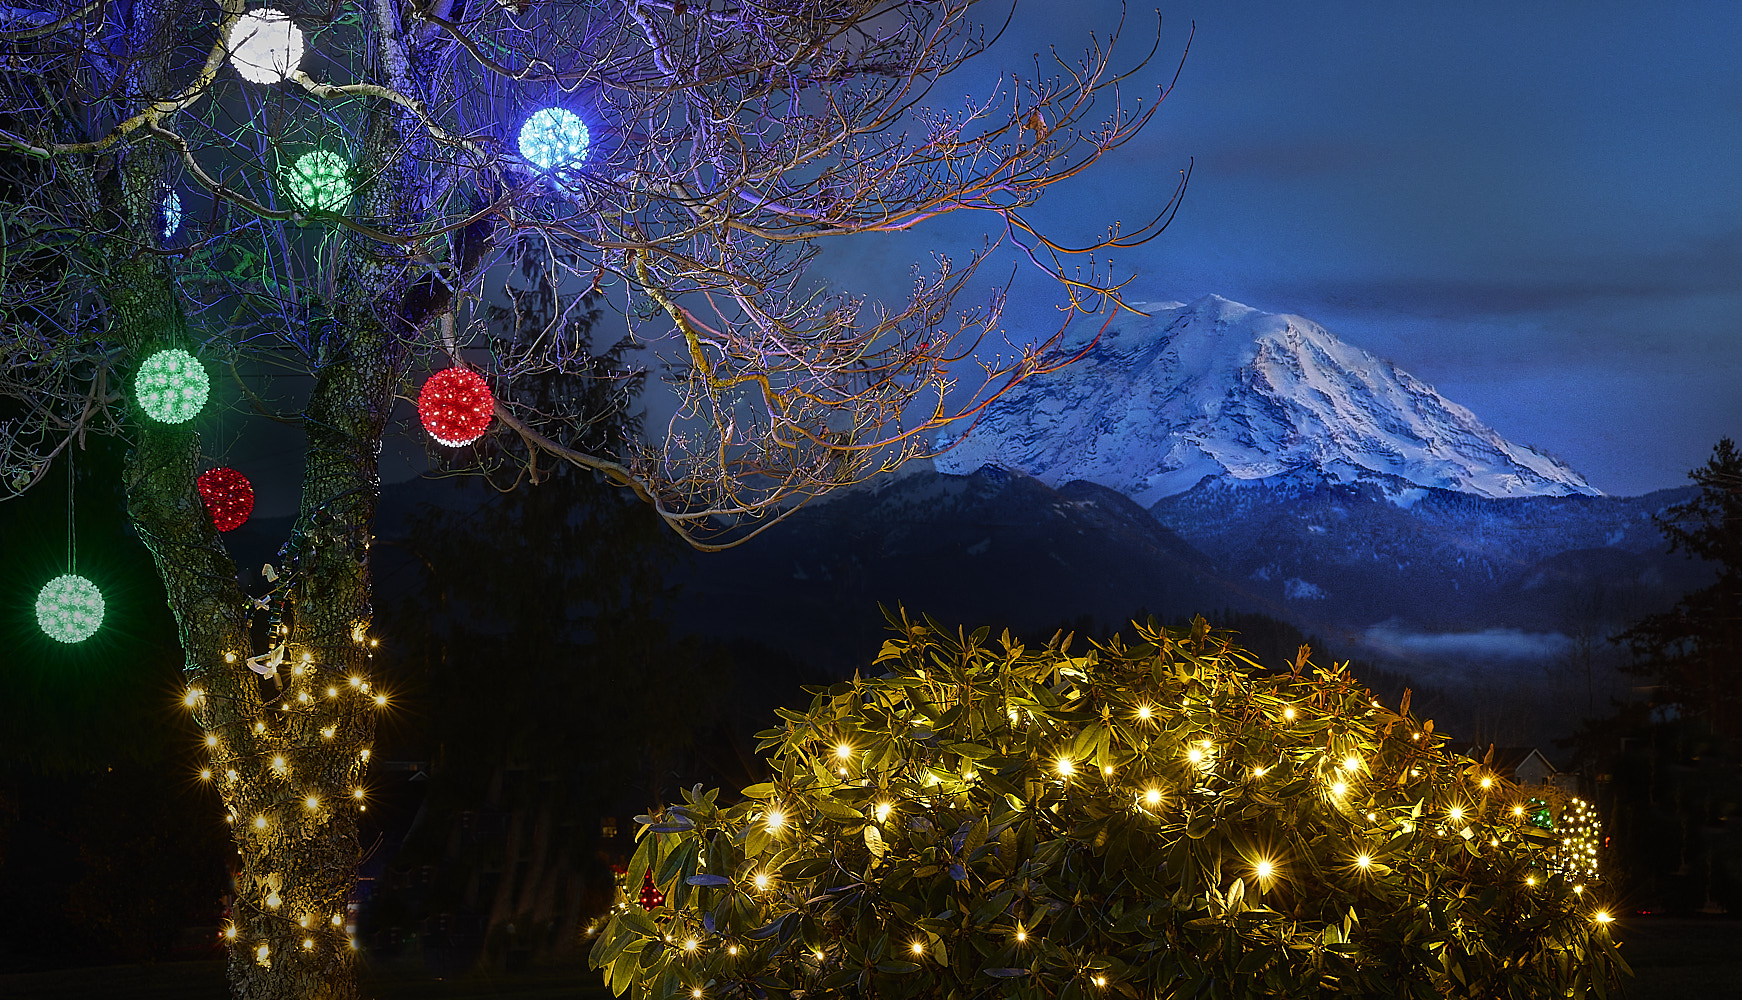 Mt Rainier at Christmas by Dan DeVries